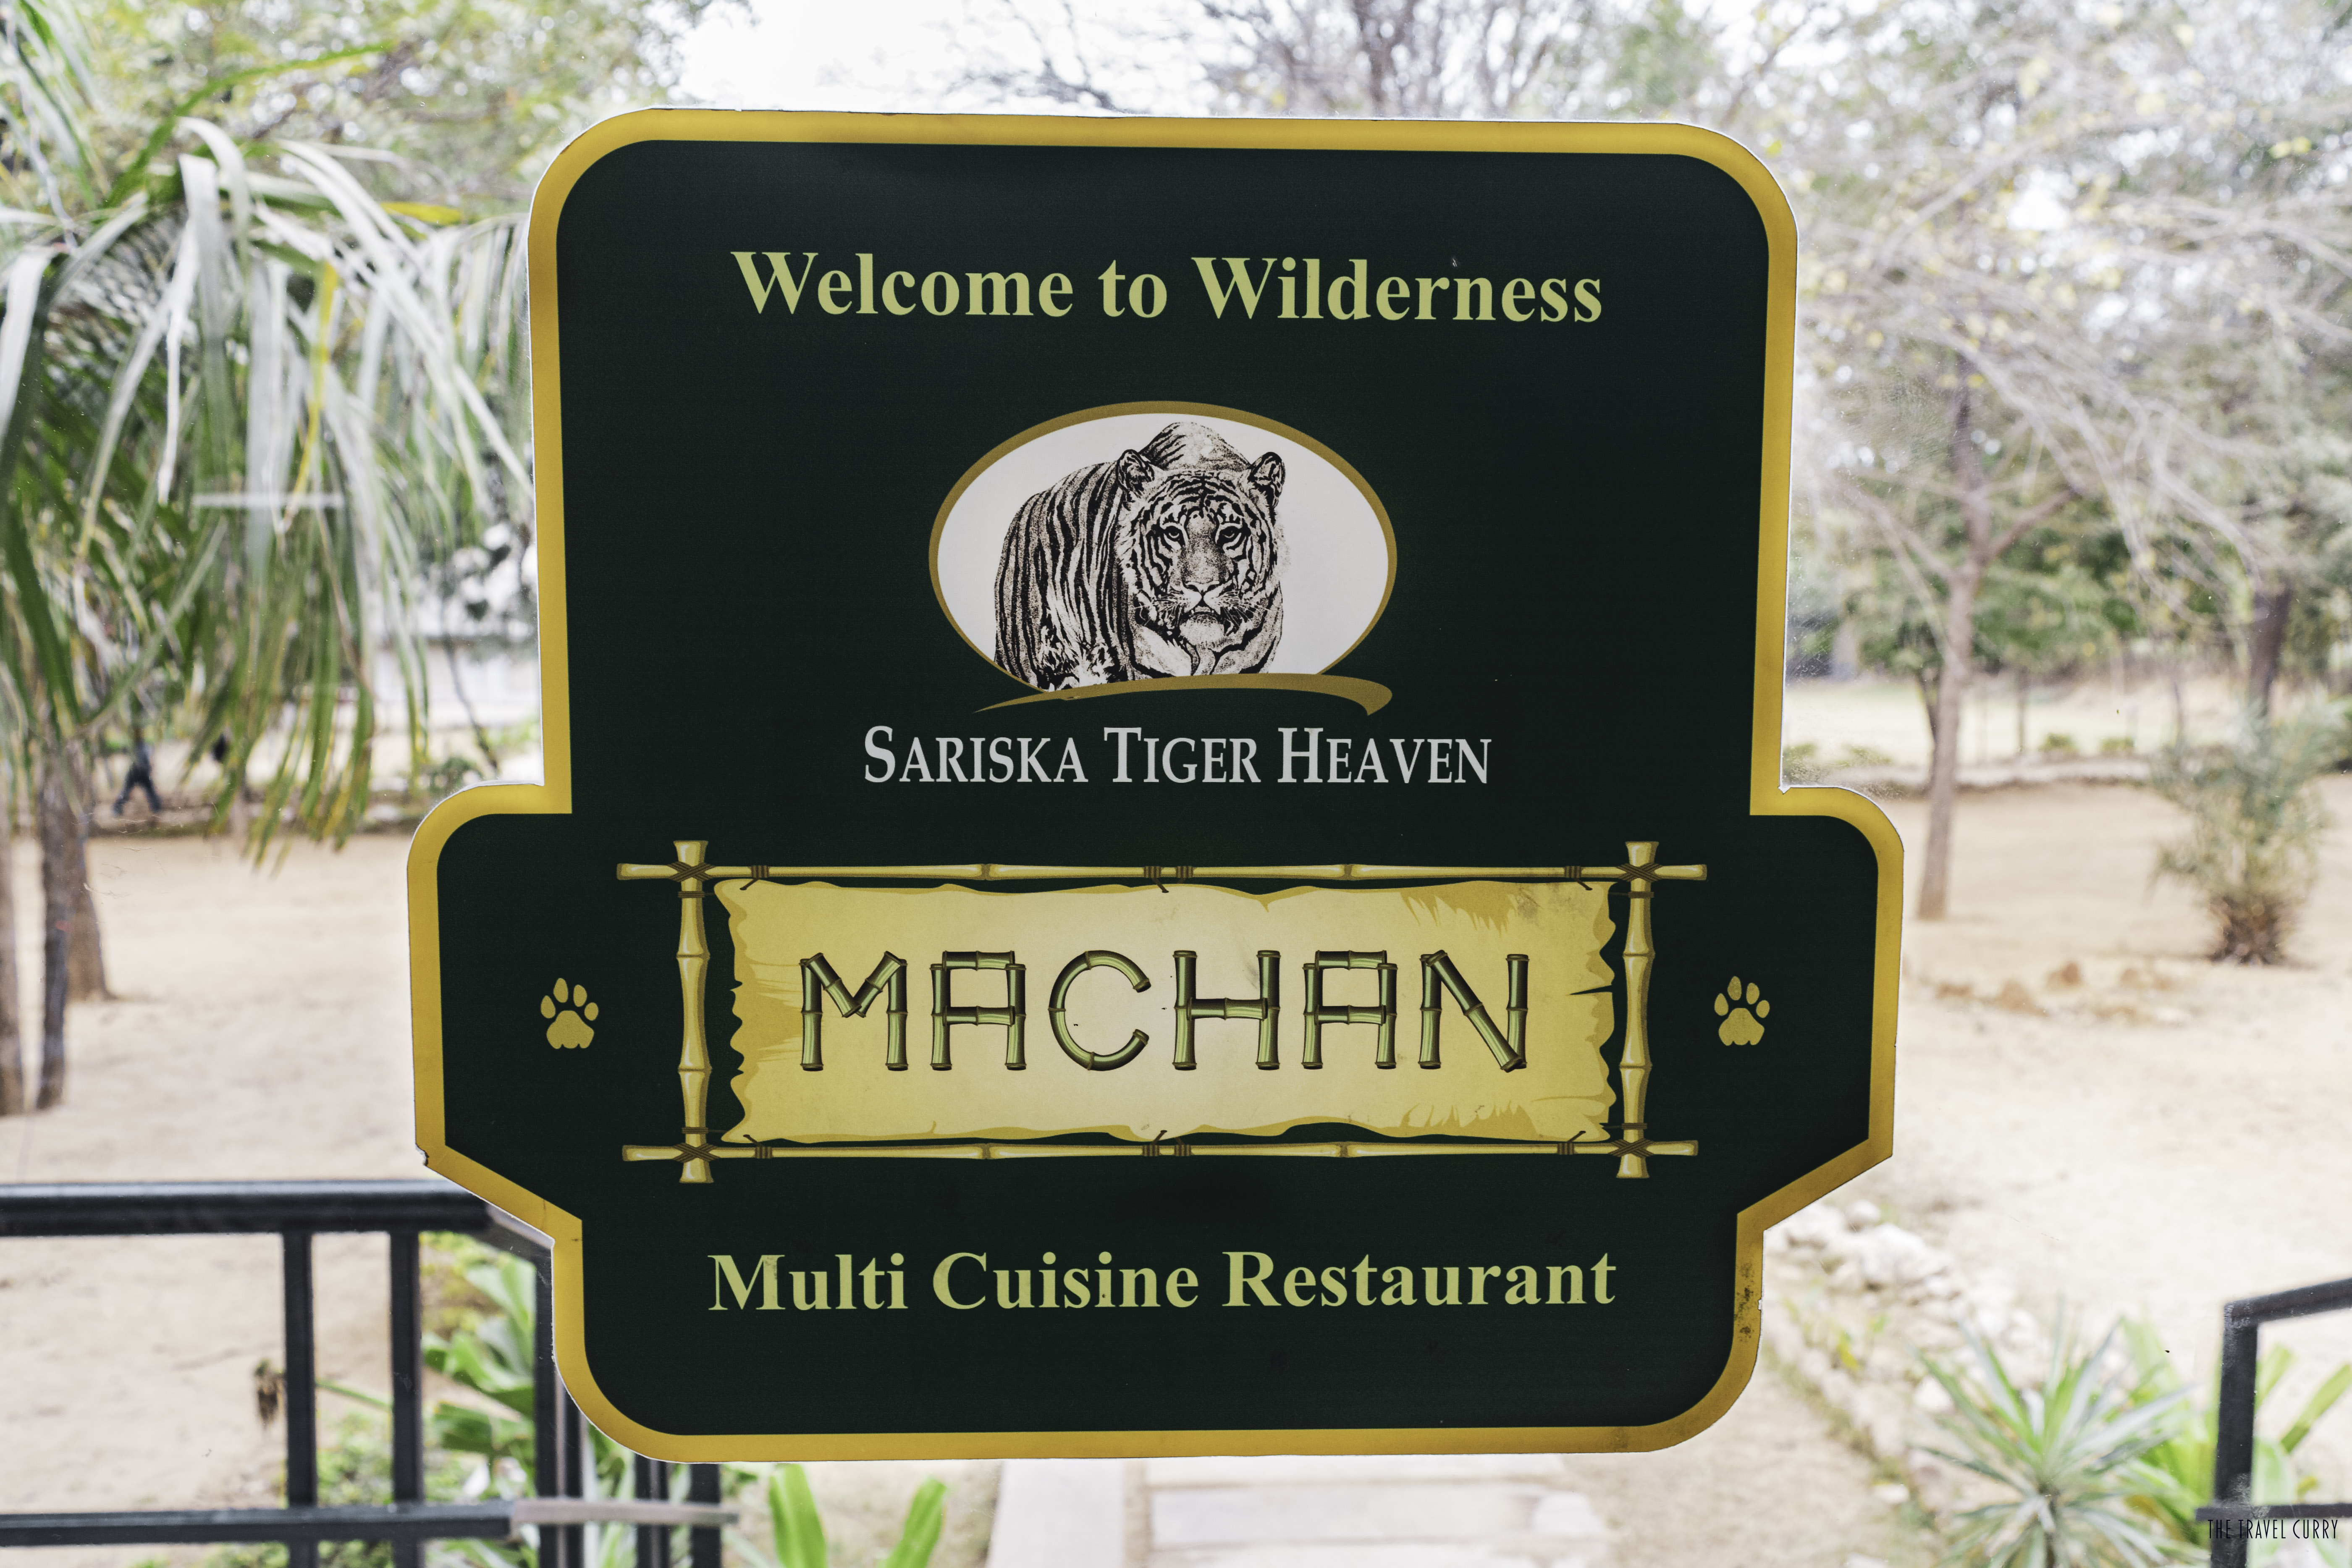 Machan, the multi cuisine restaurant